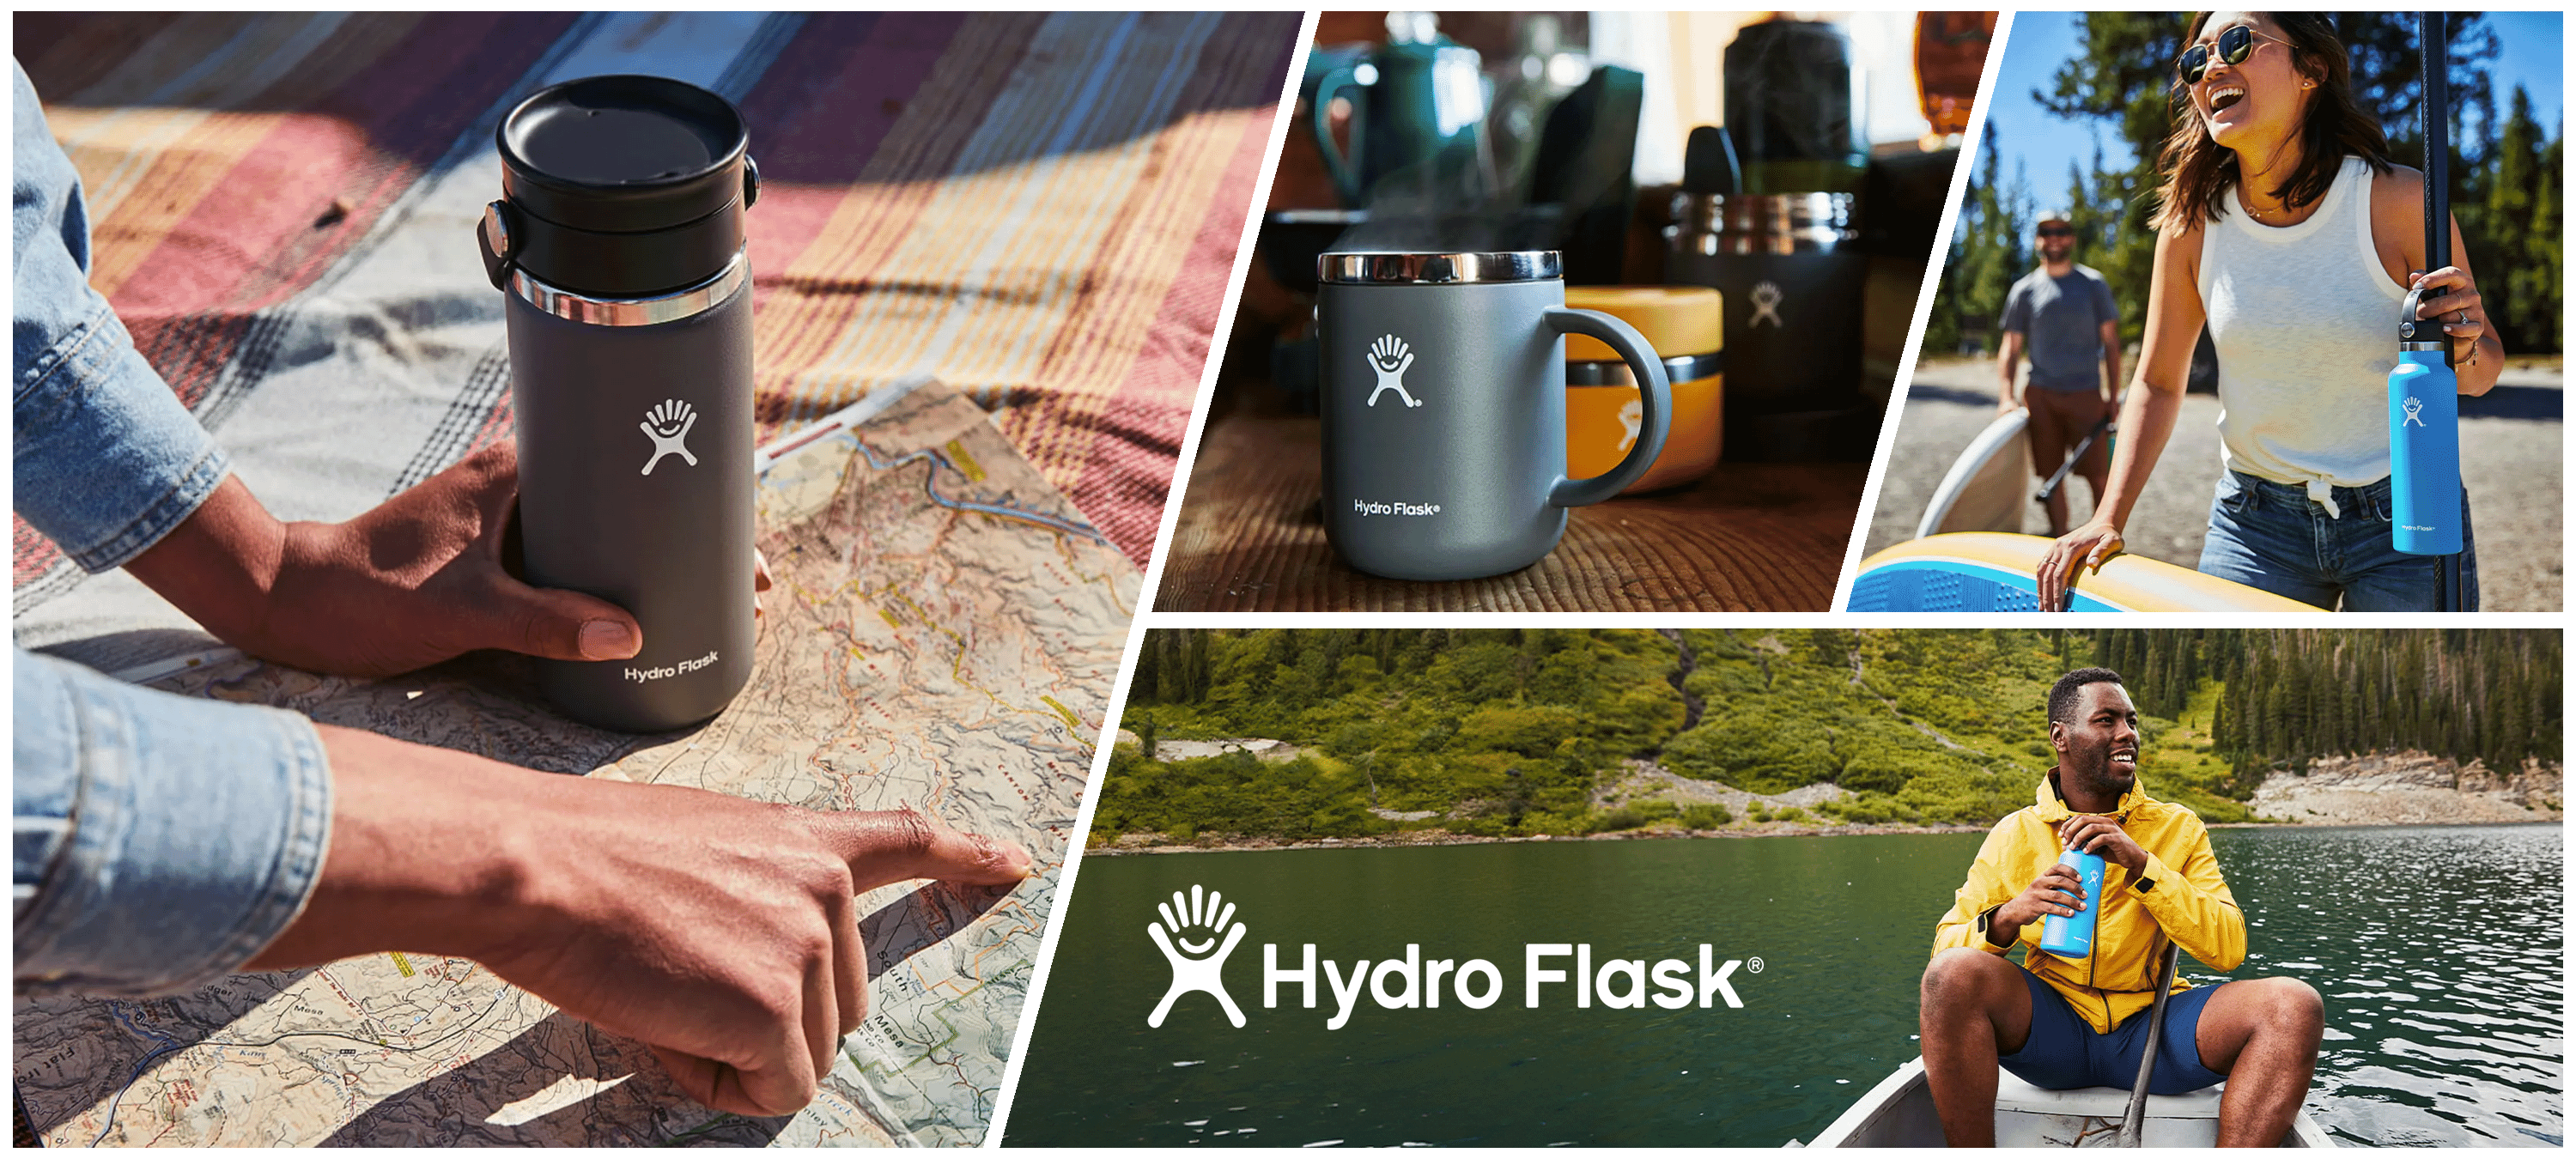 Hydro Flask Slim Cooler Cup Barware